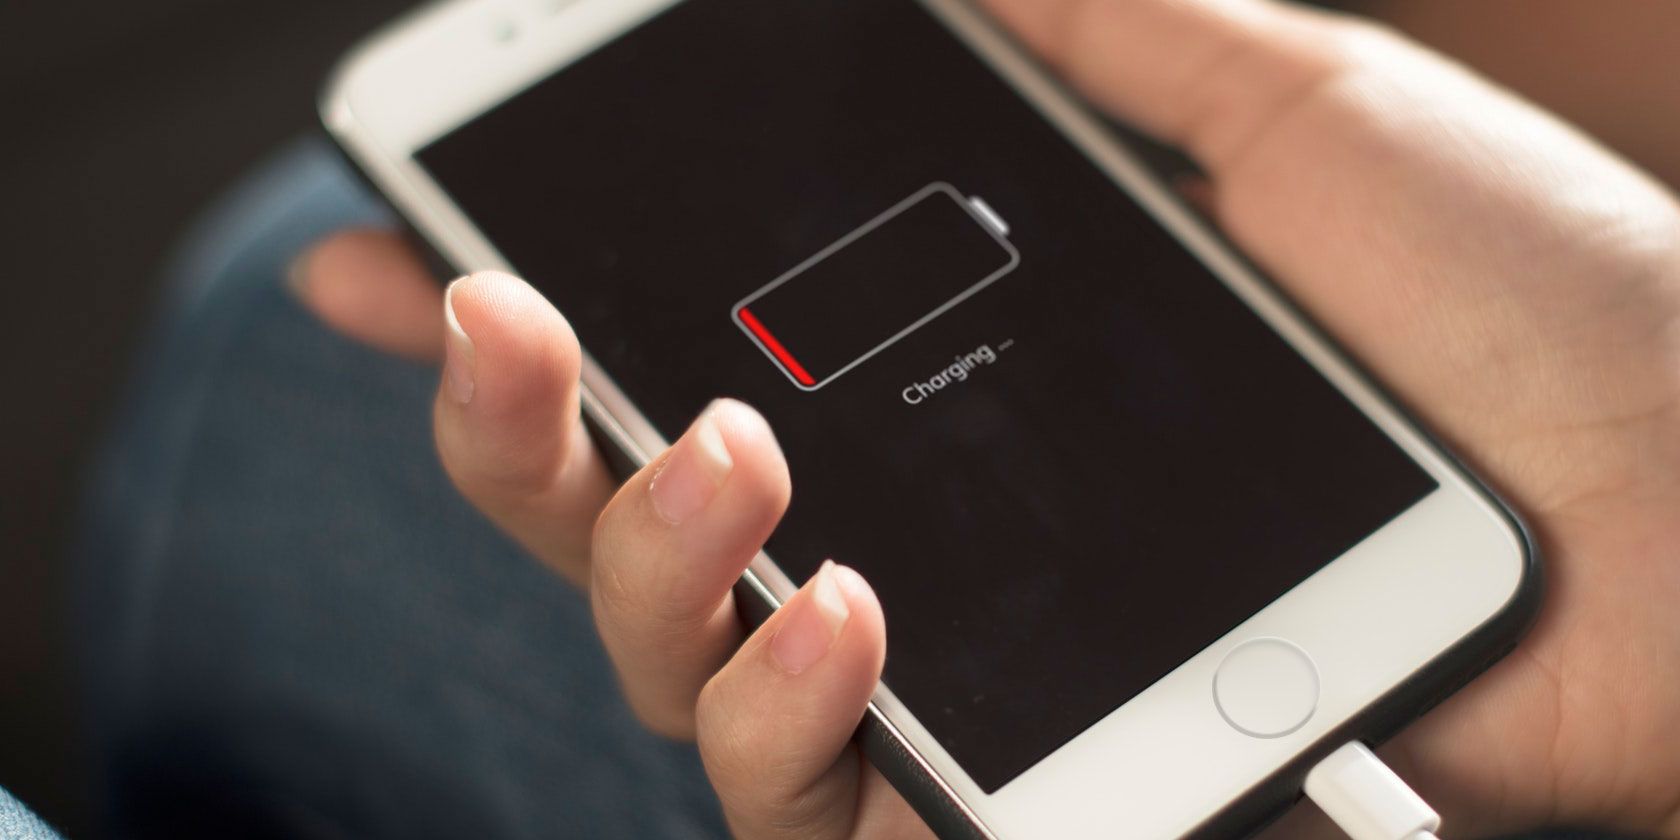 Smartphone batteries longer